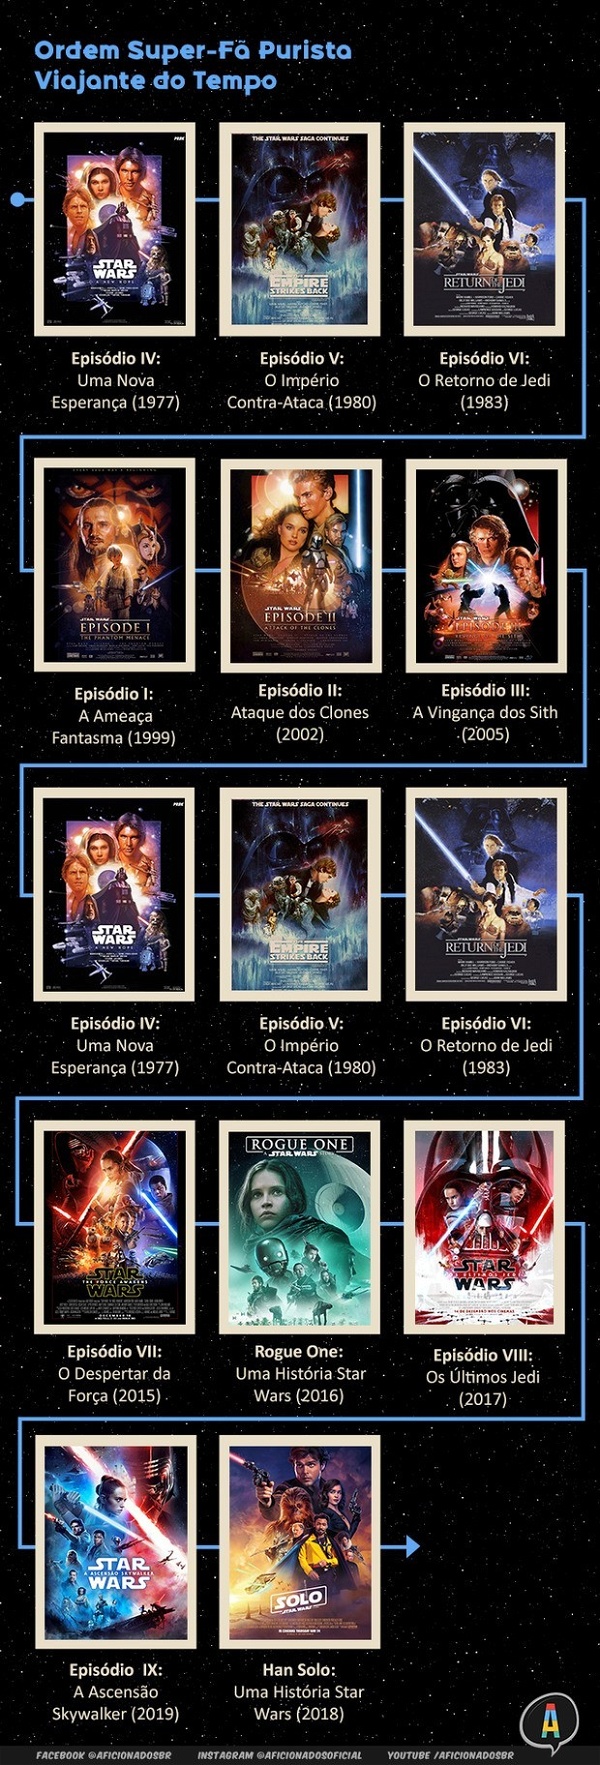 Entenda a ordem cronológica de toda a saga Star Wars [ATUALIZADO